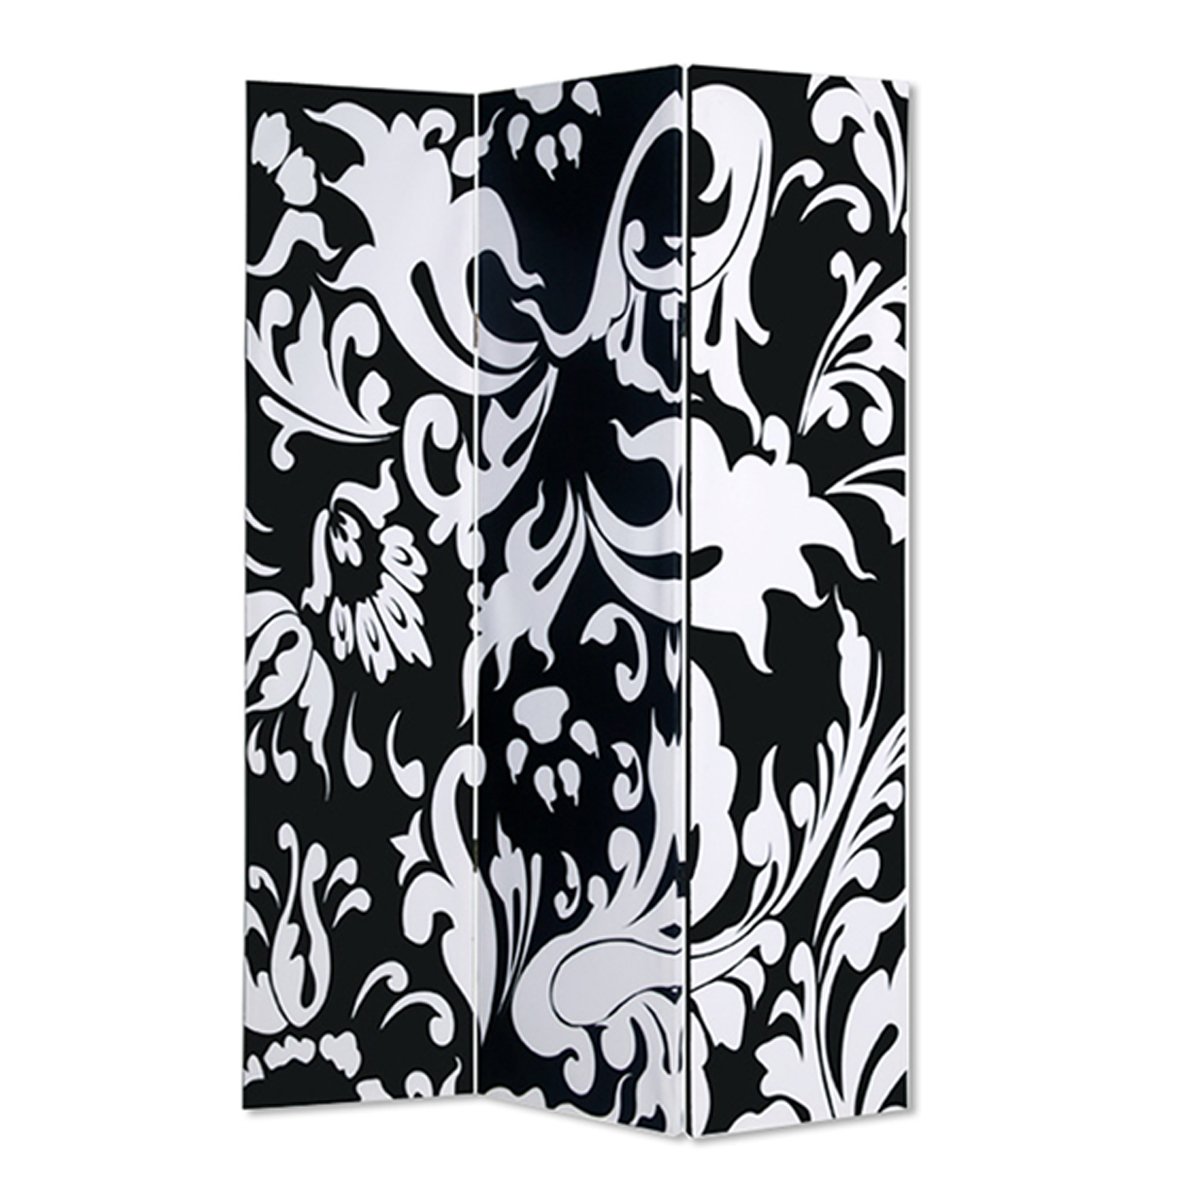 3 Panel Foldable Room Divider With Filigree Design, Black And White- Saltoro Sherpi